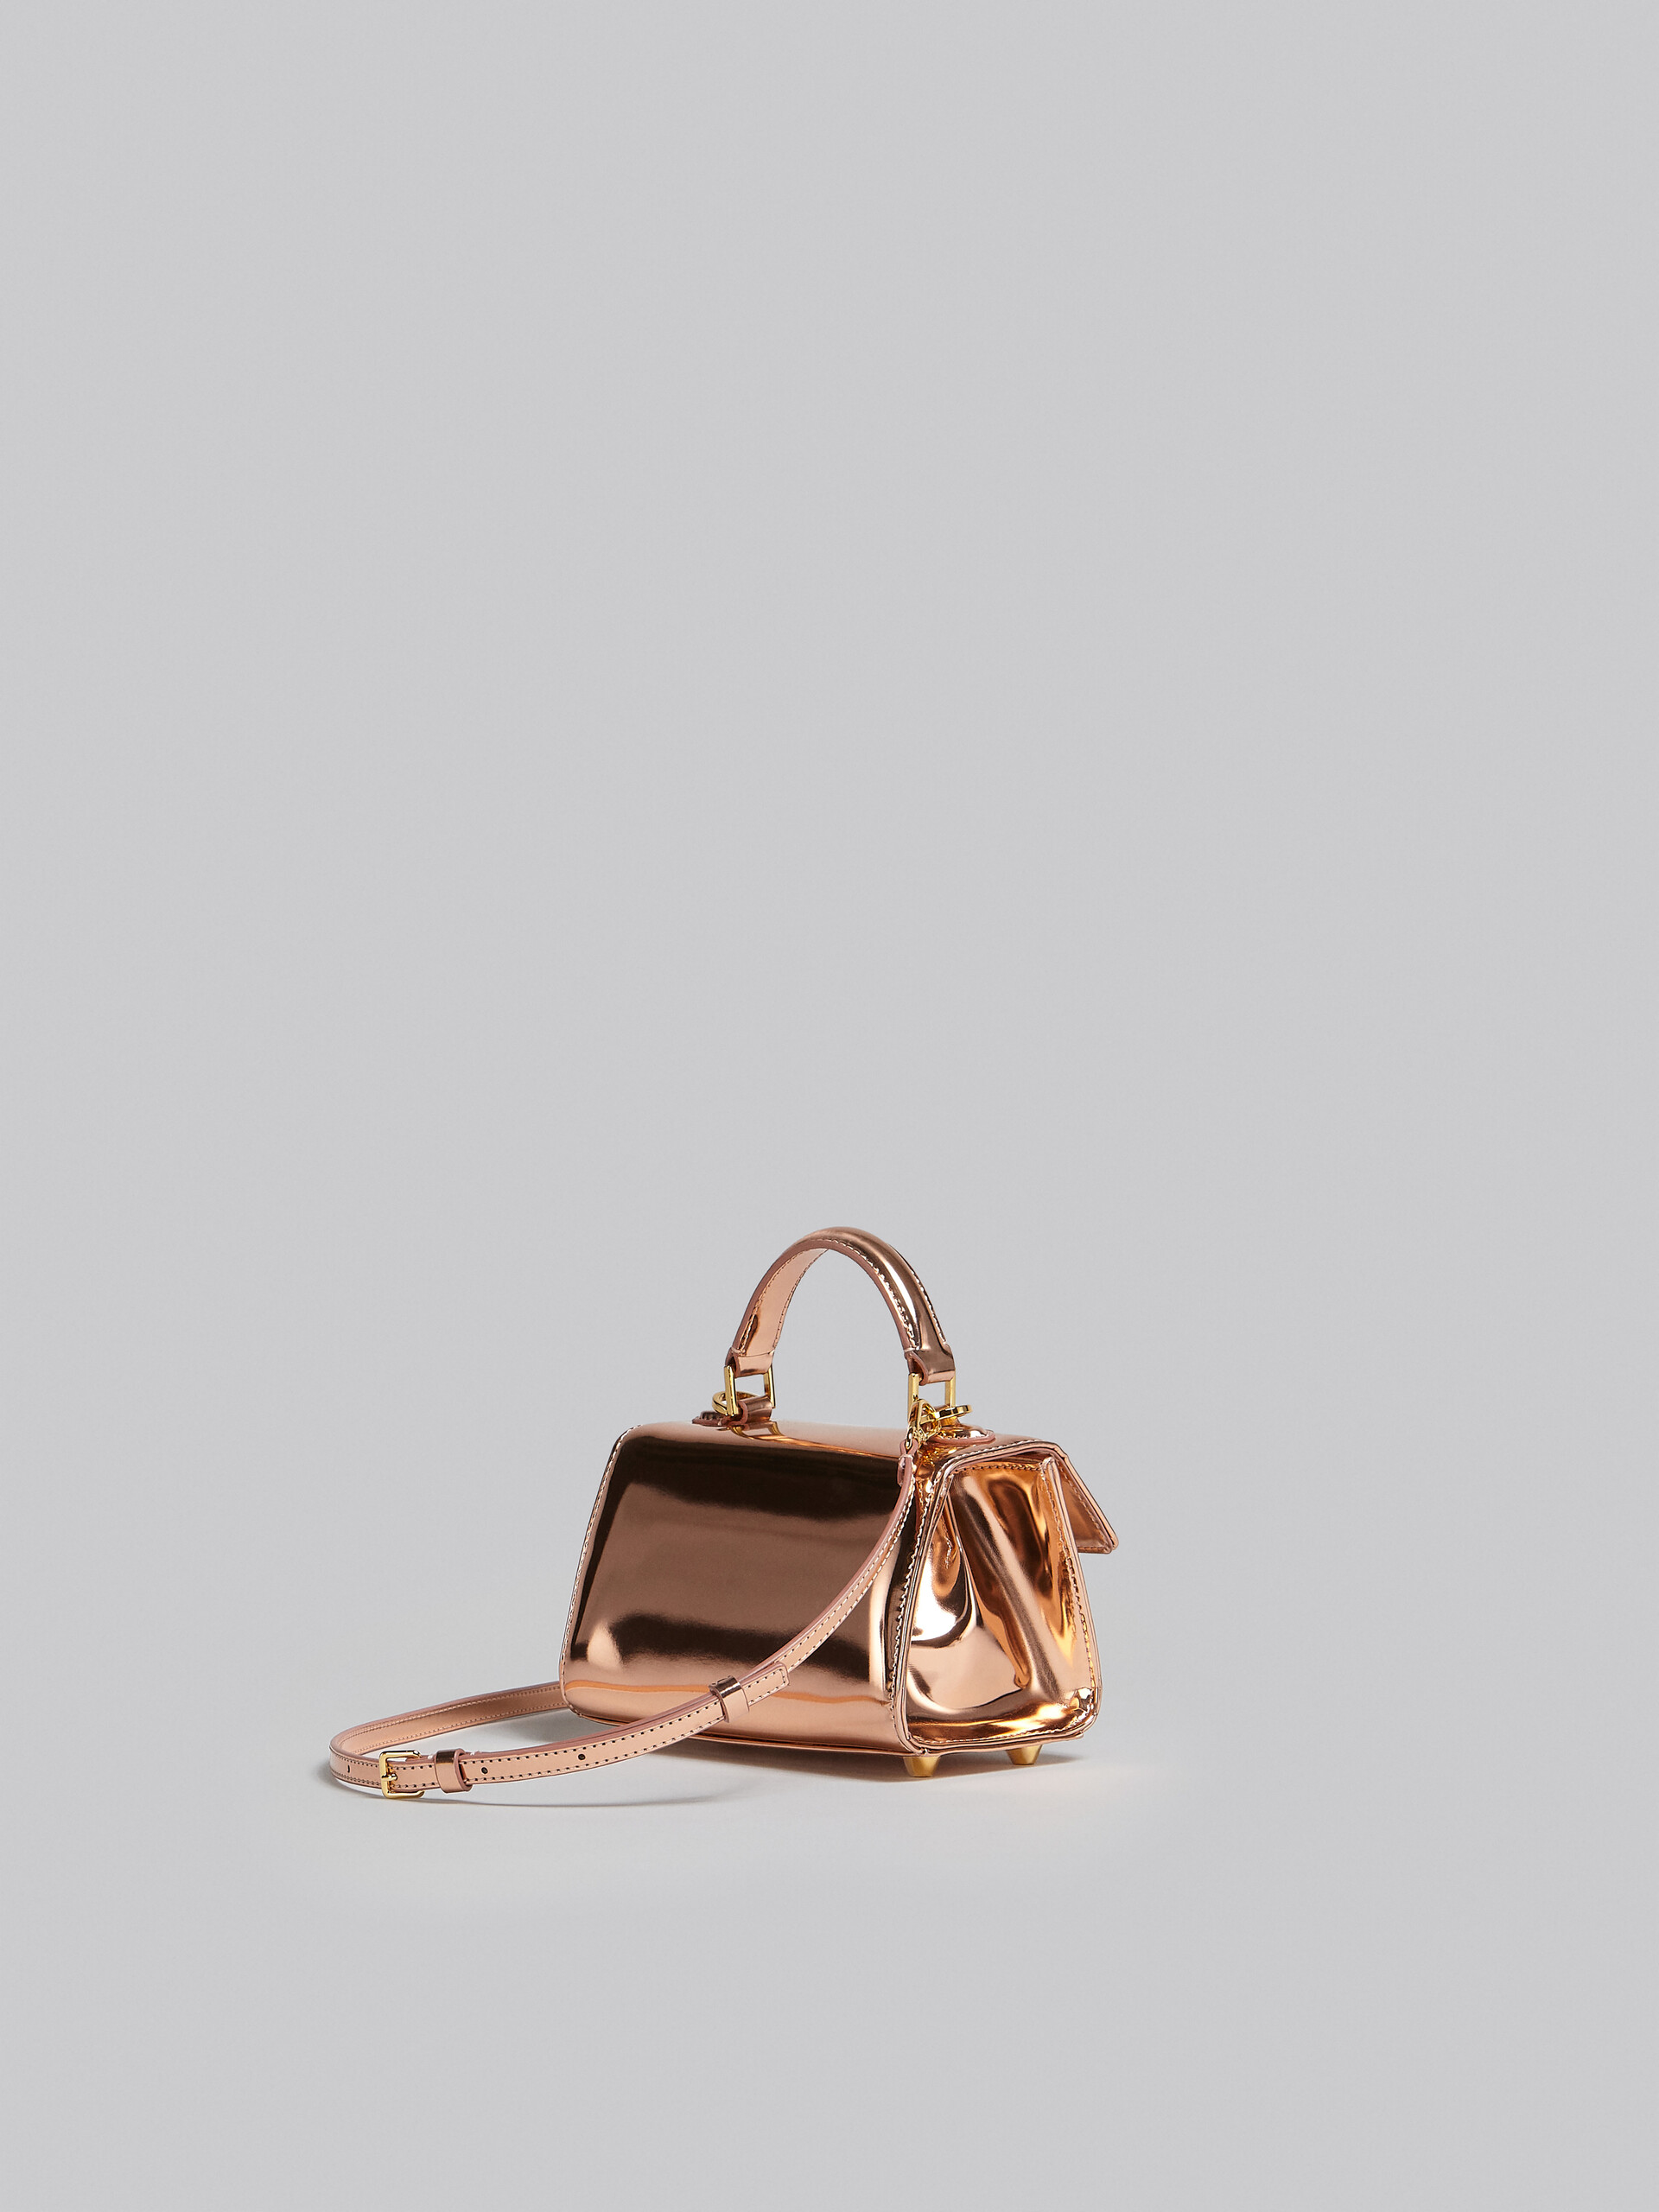 Relativity Mini Bag in rose gold mirrored leather - Handbags - Image 3